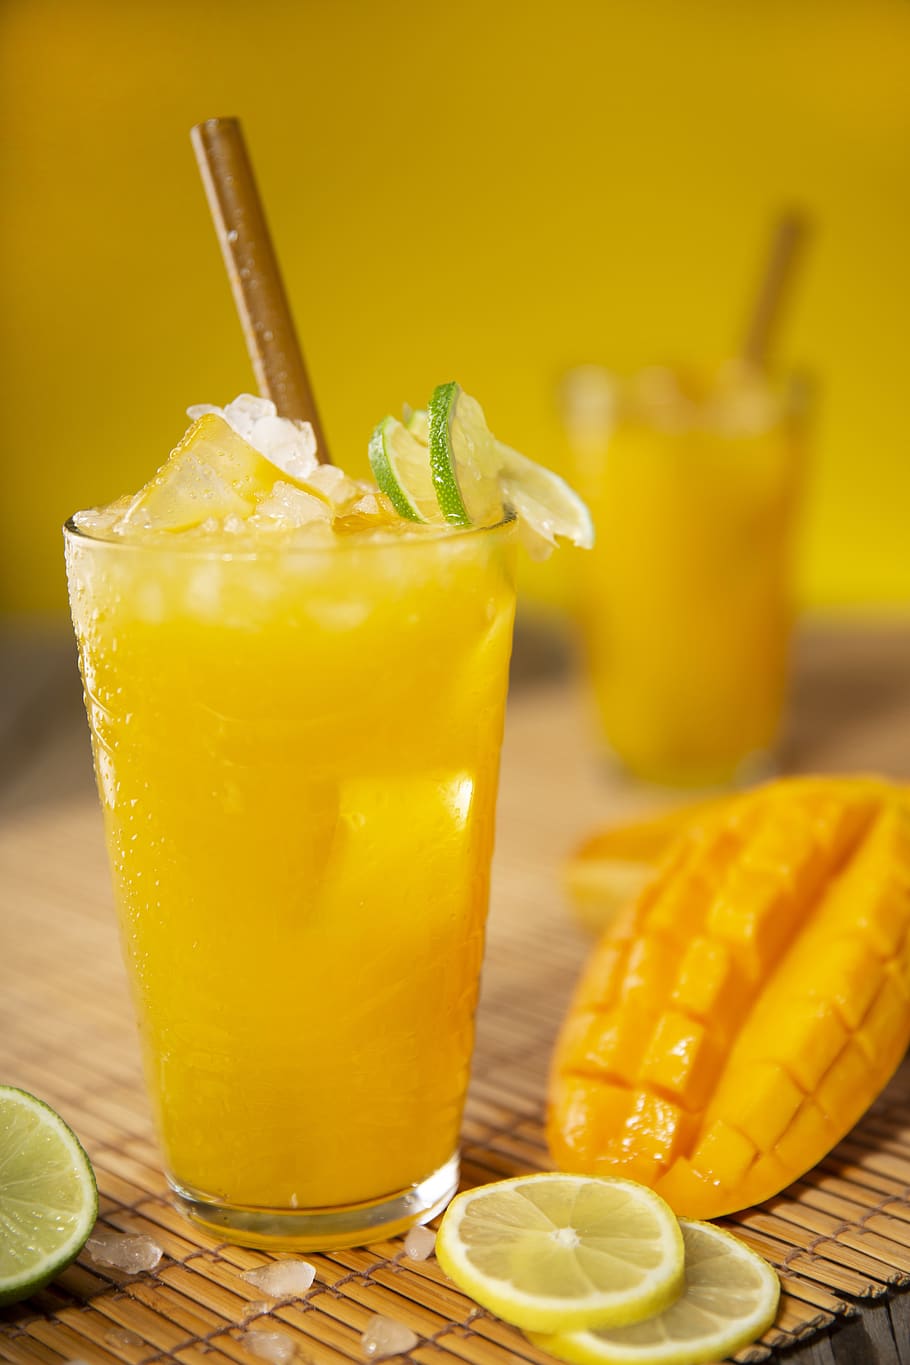 mango and lemon juice, drink, beverage, orange juice, beer, alcohol